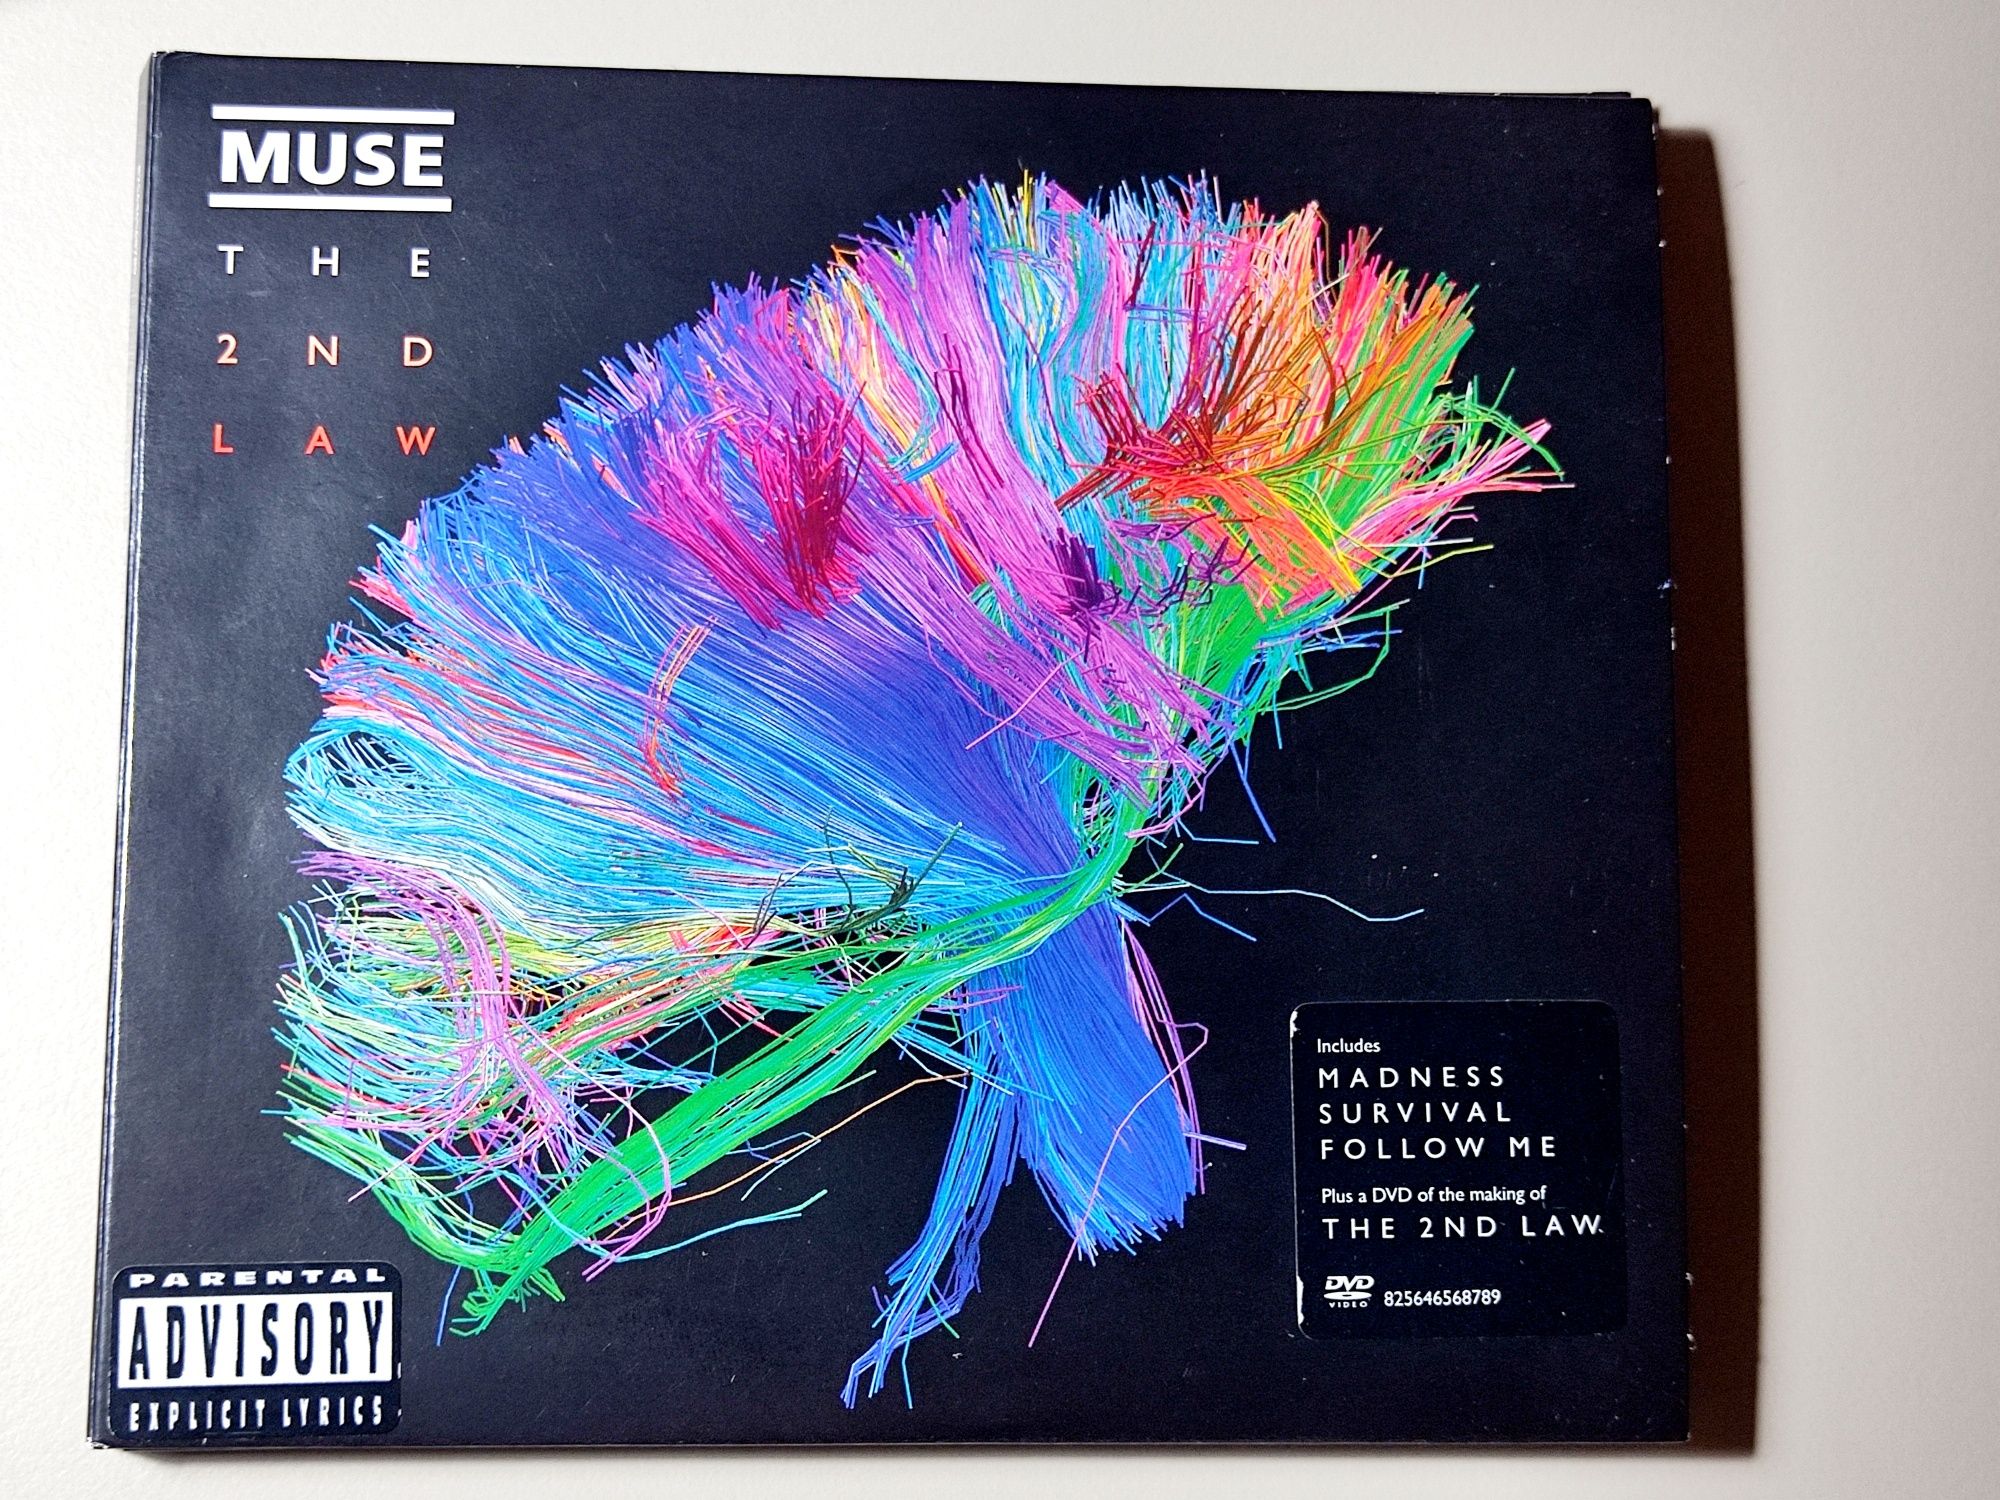 The 2nd Law - Muse (2CDs) album limitado